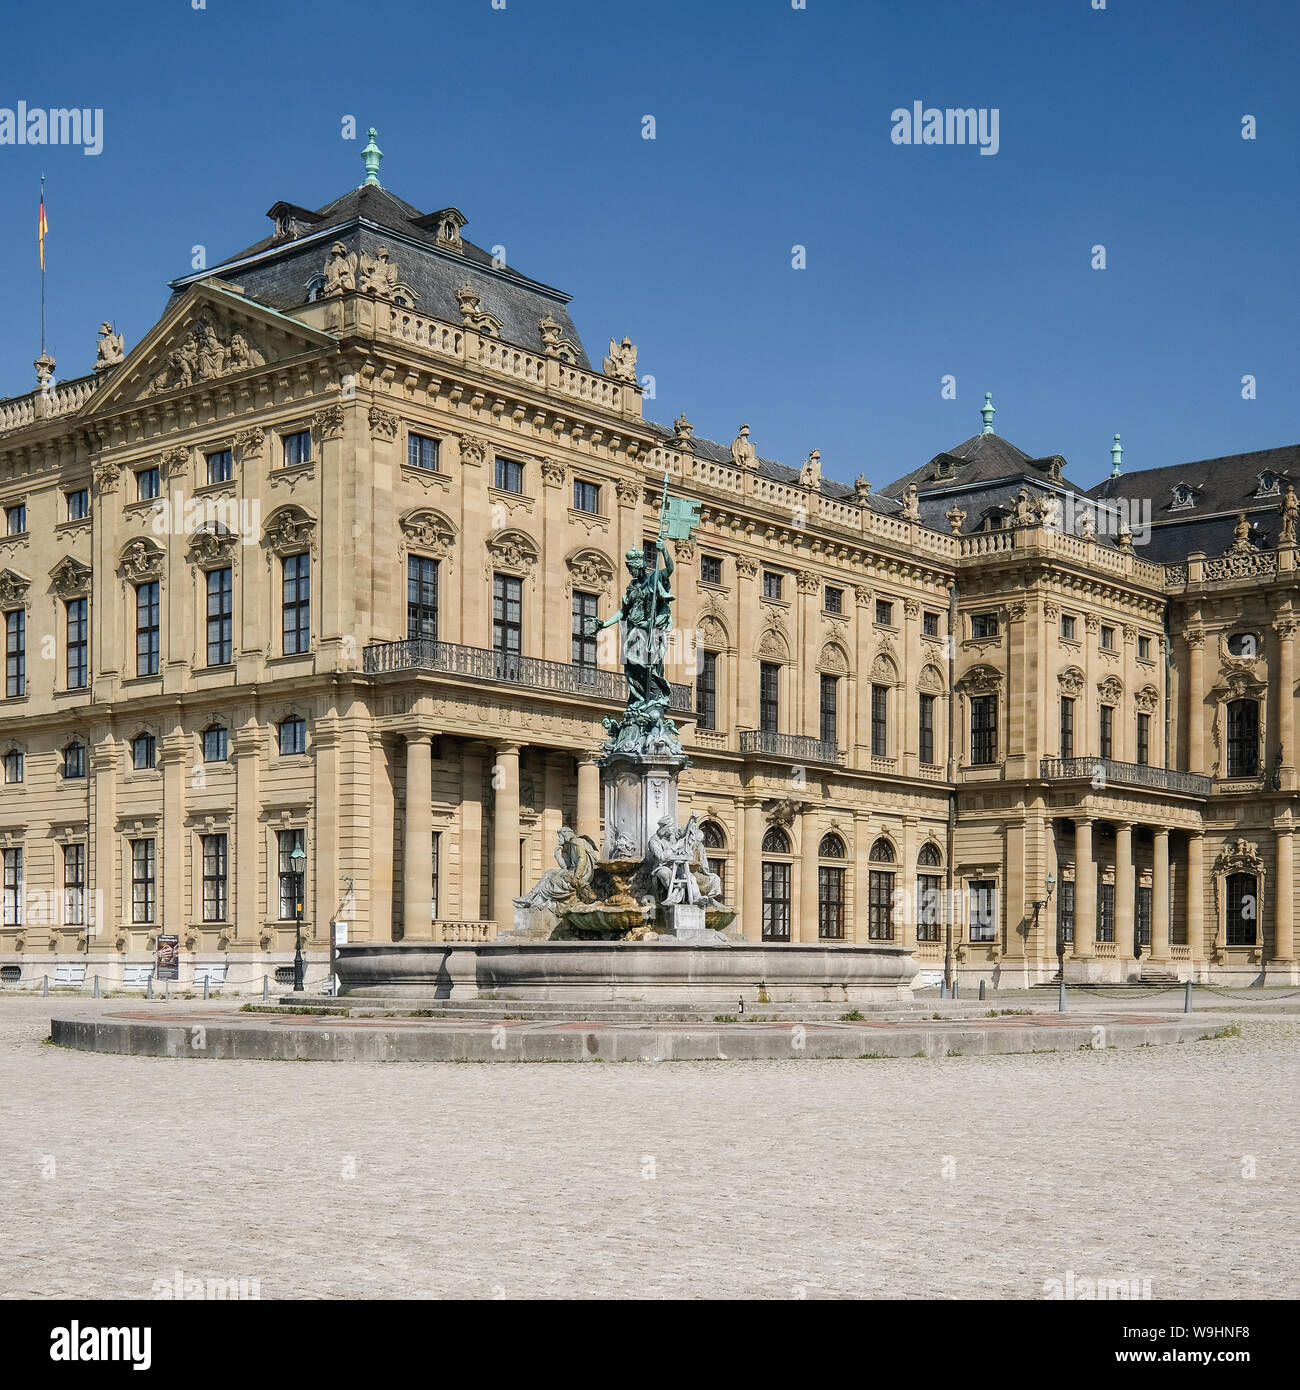 The Residenz, Würzburg Stock Photo